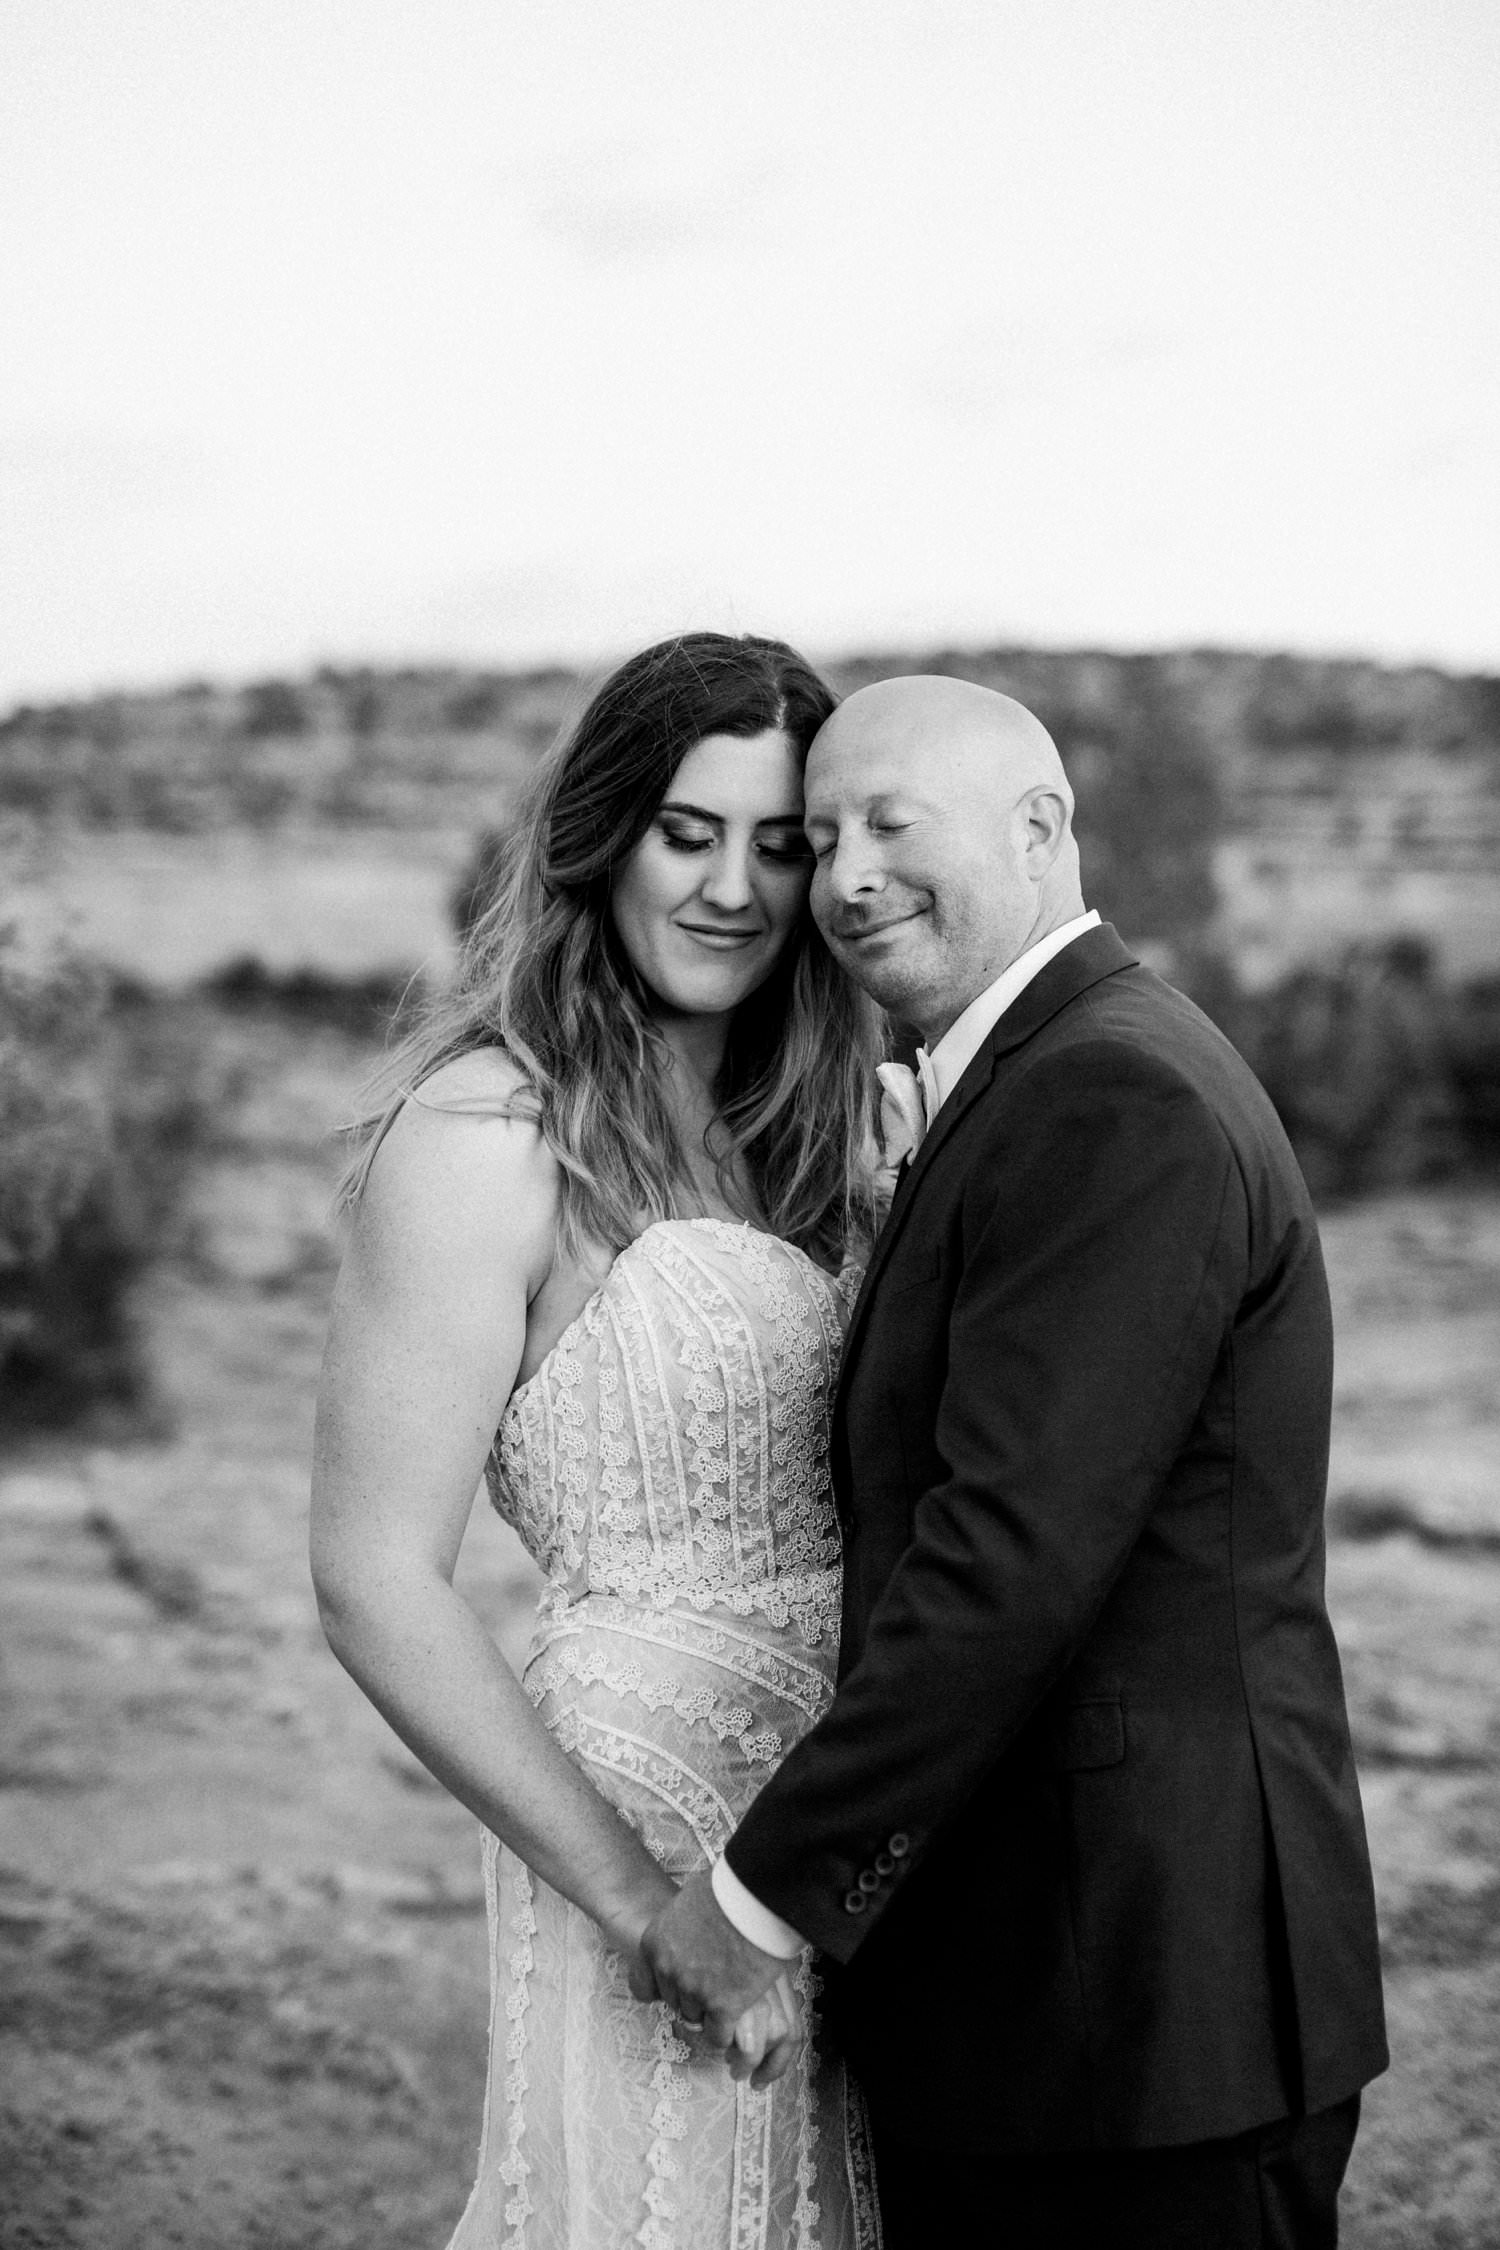 Colorado National Monument wedding photos